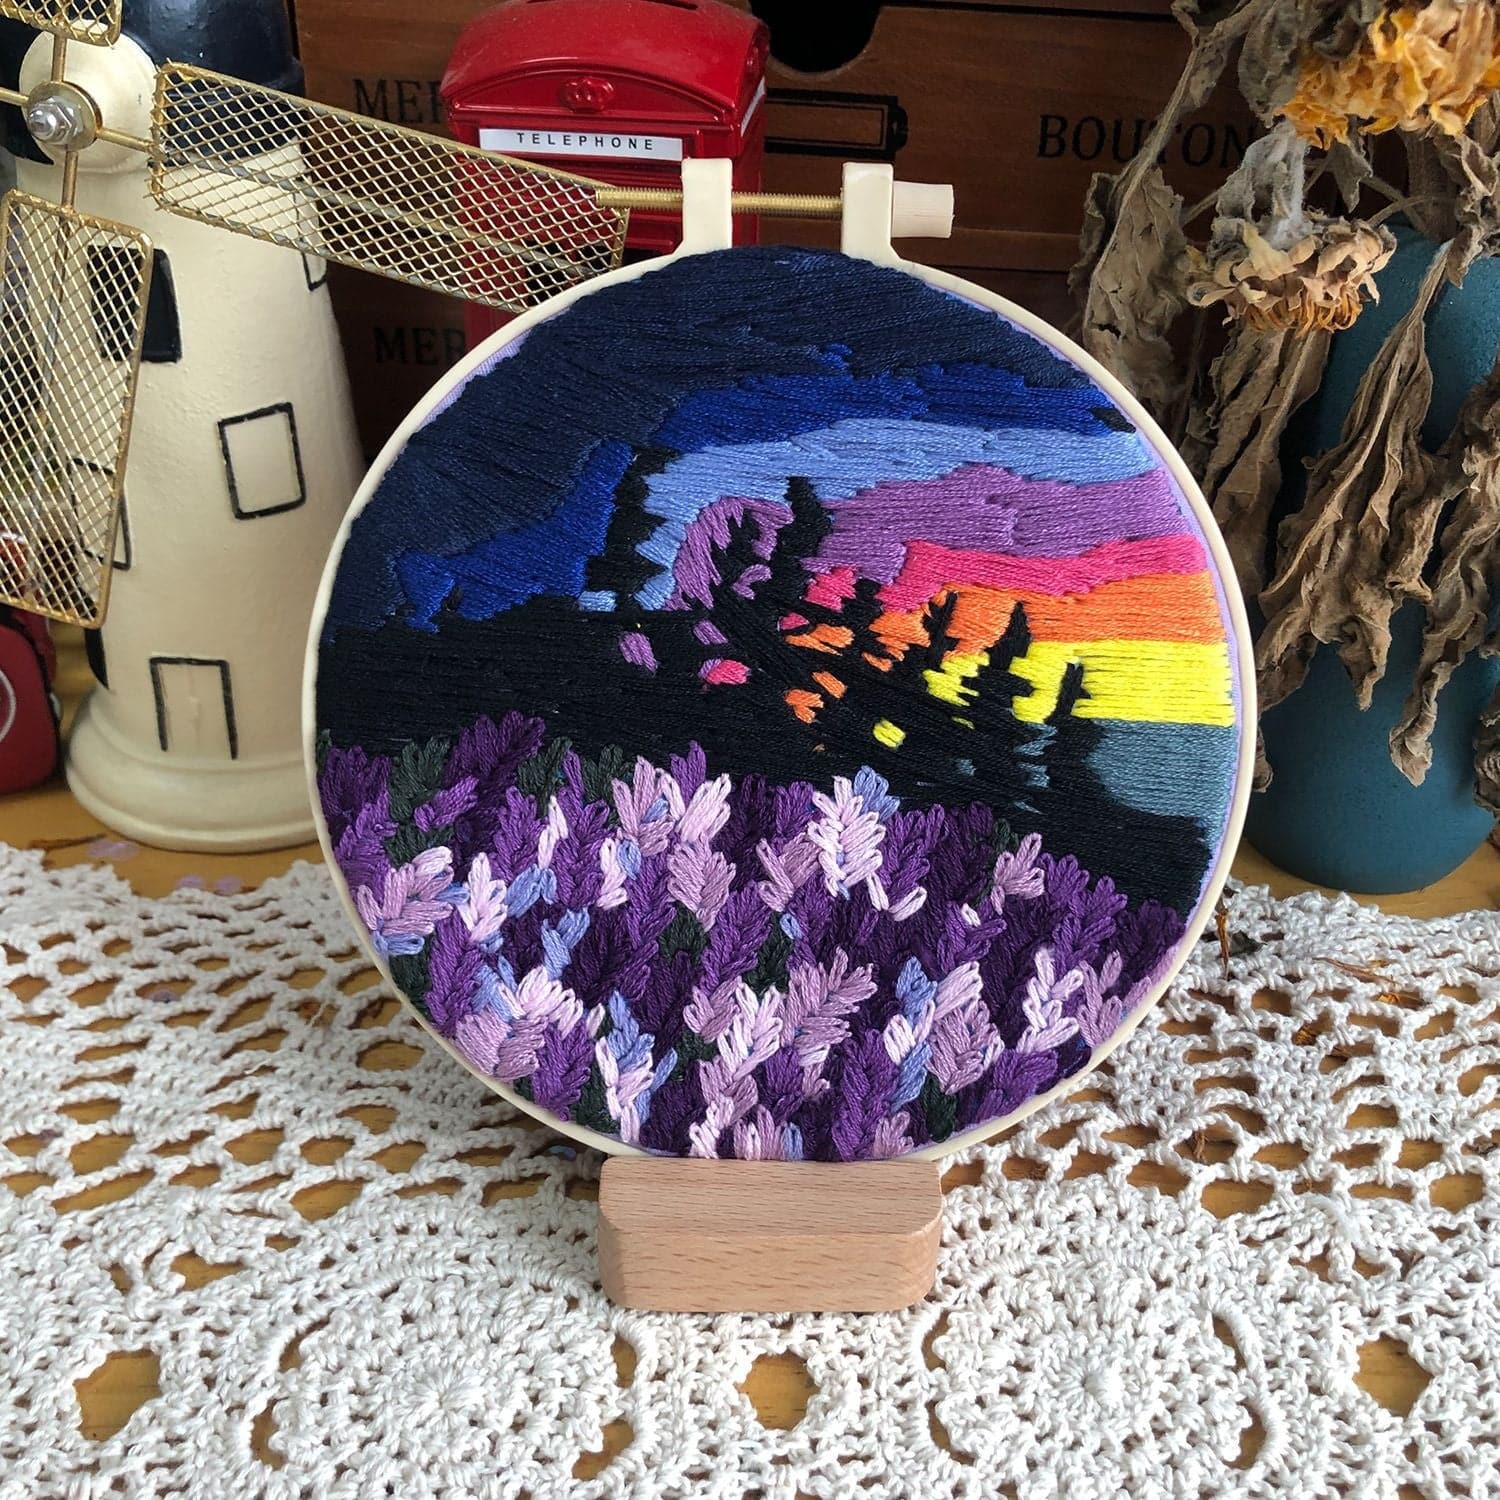 Flower Field-embroidery ktclubs.com